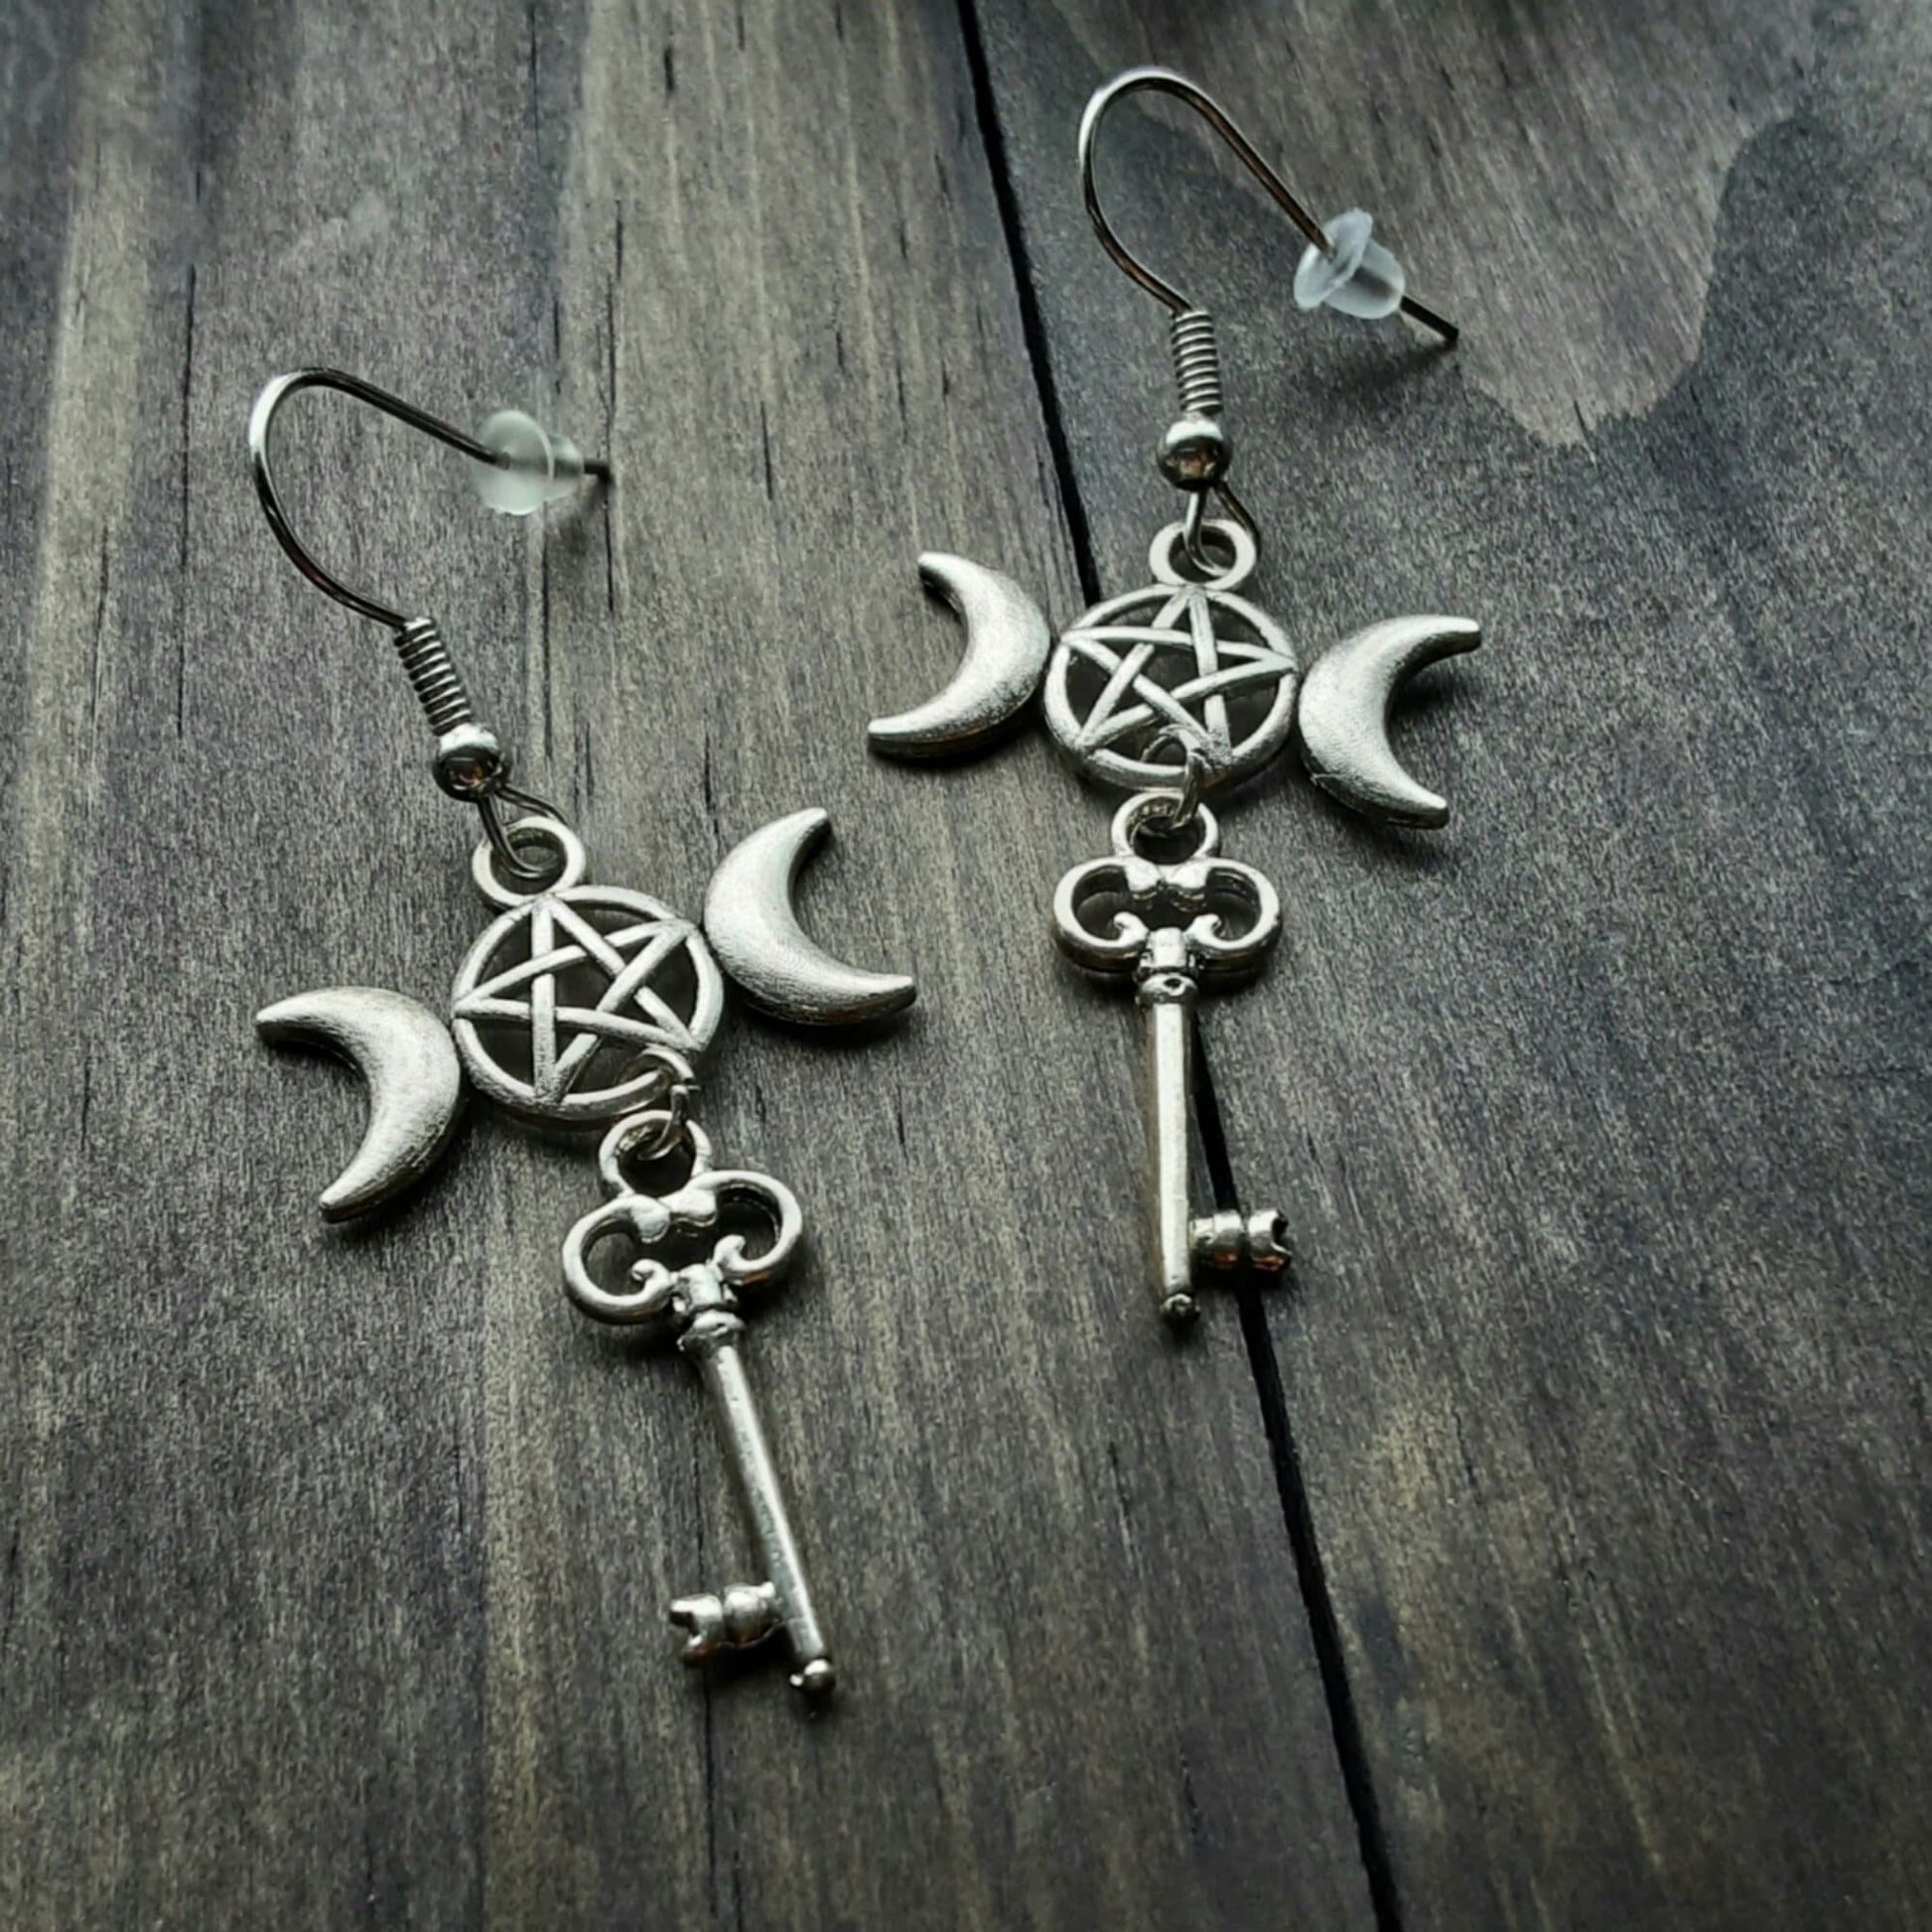 Hekate key earrings Triple Moon Goddess symbol charms on hooks on wooden background